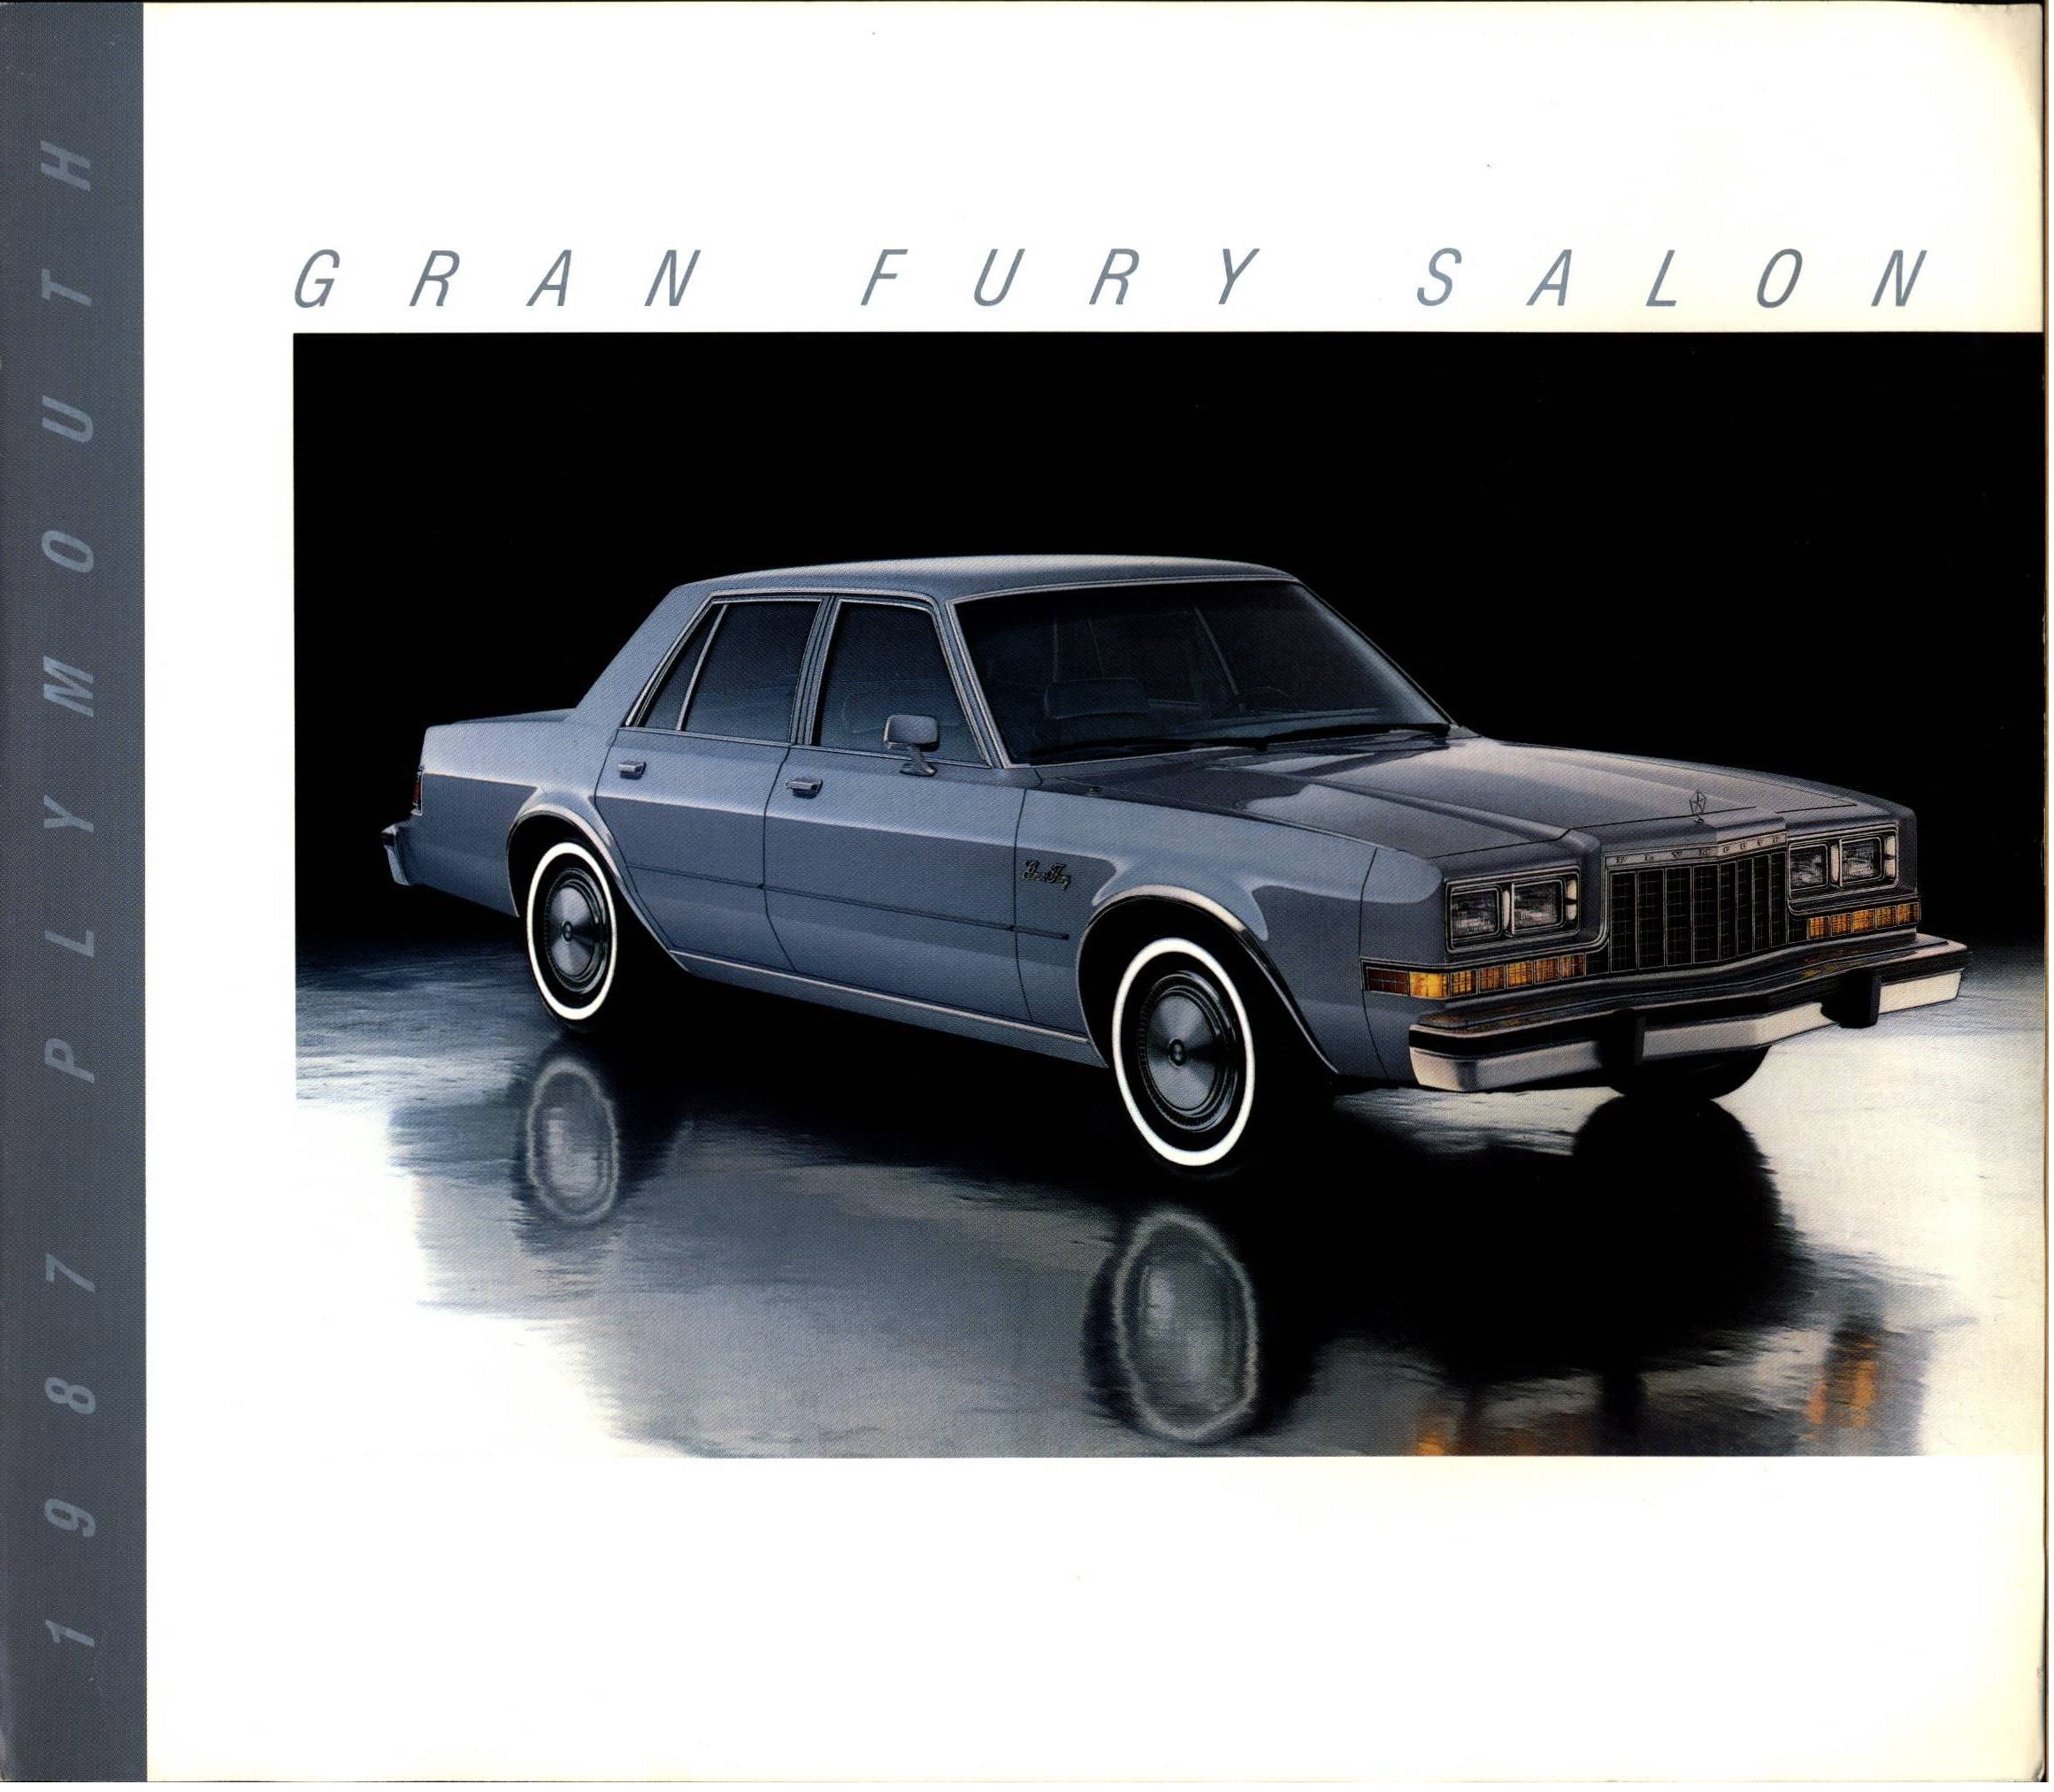 1987 Plymouth Gran Fury Salon Brochure 01